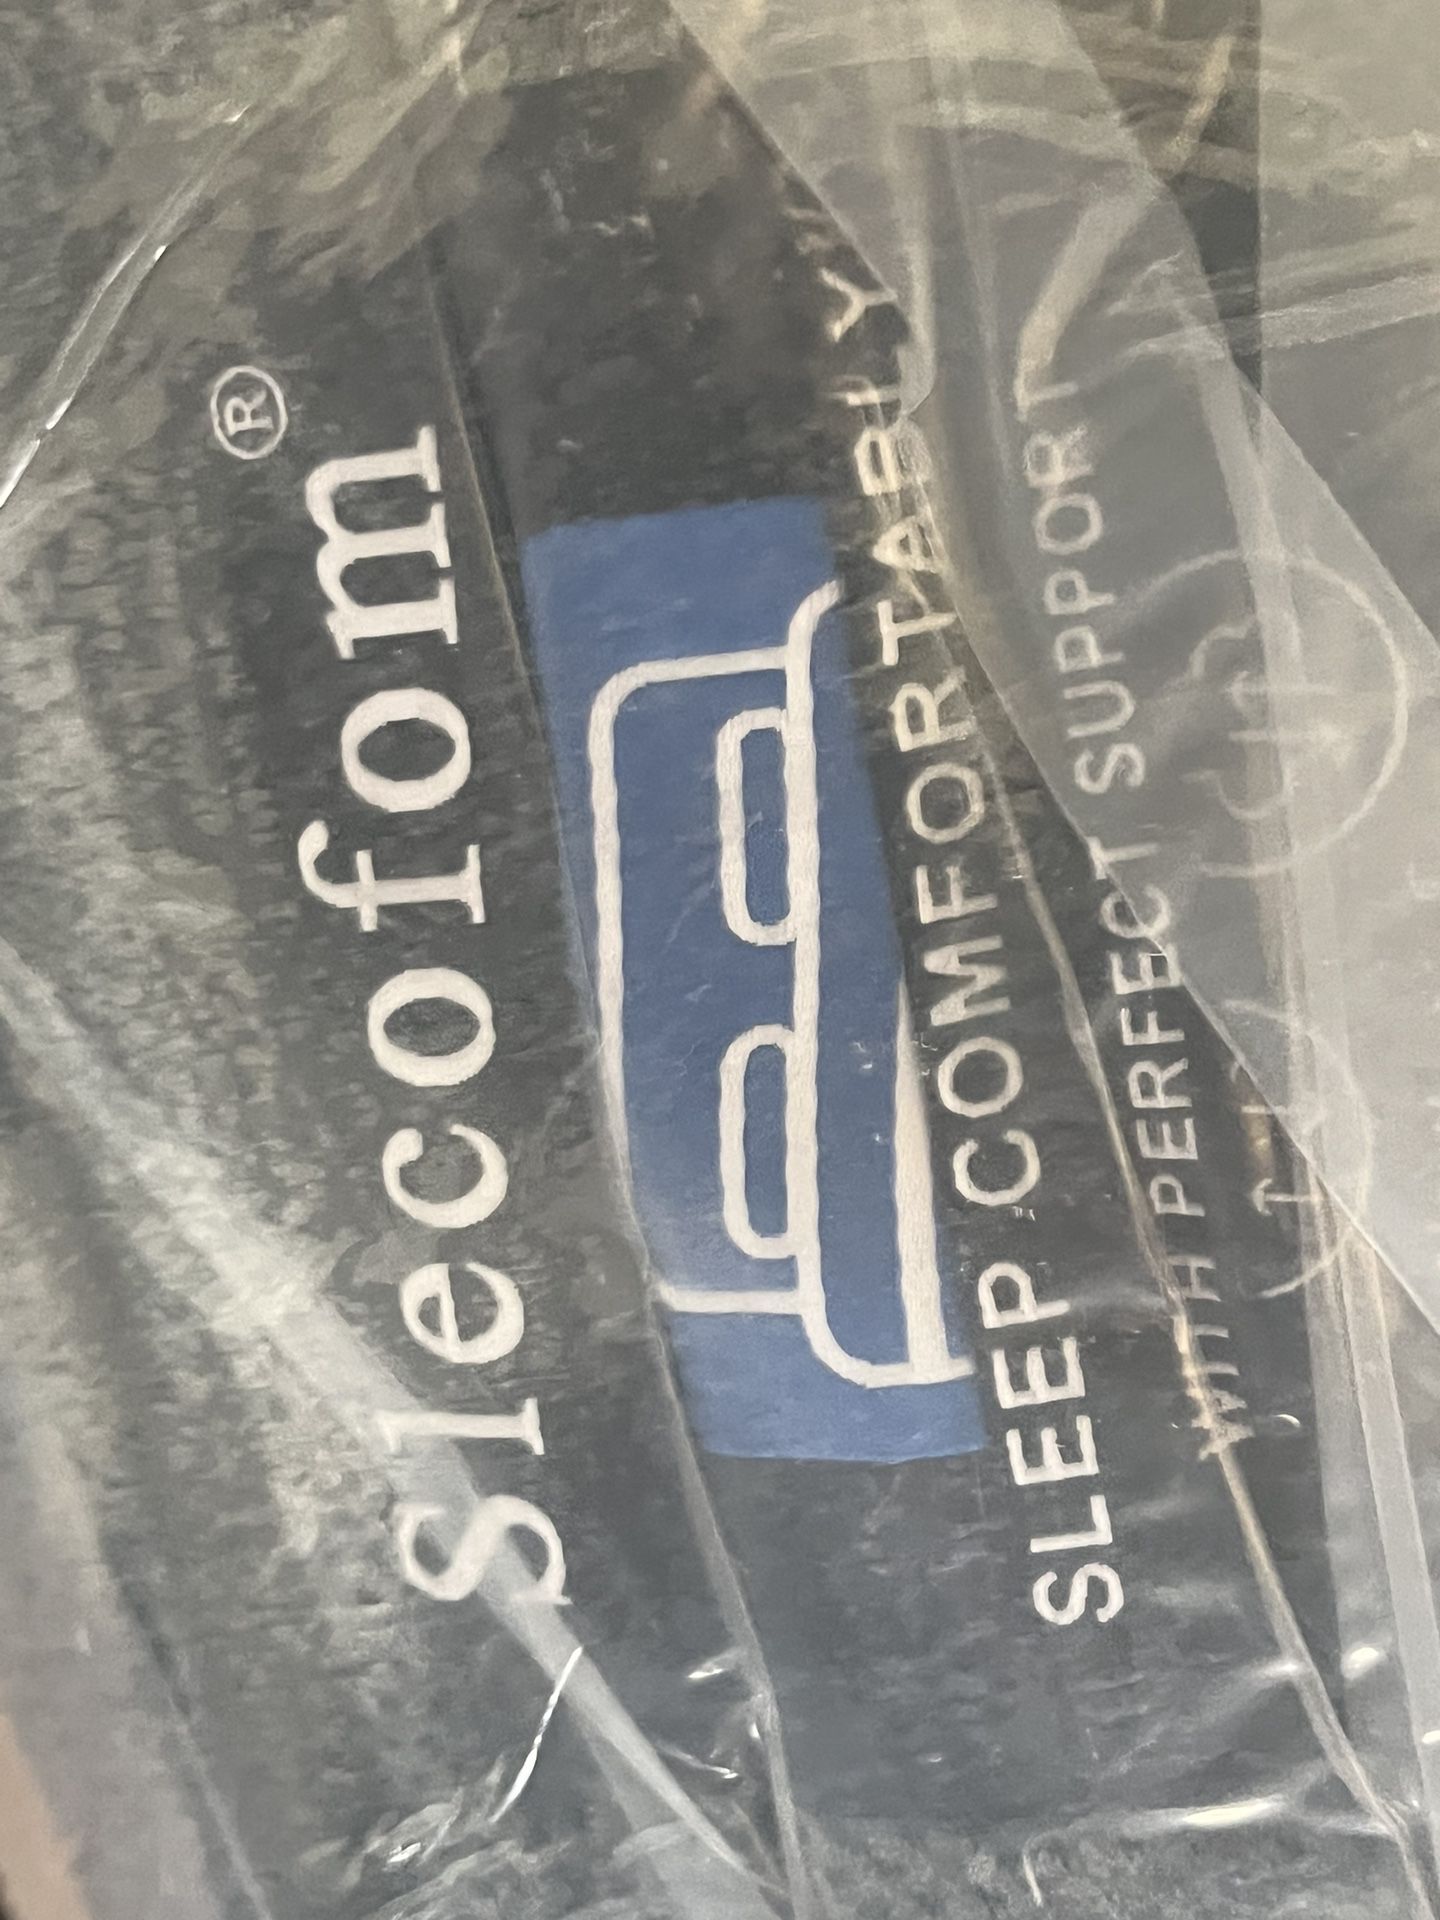 Slecofom 12 inch pocket mattress